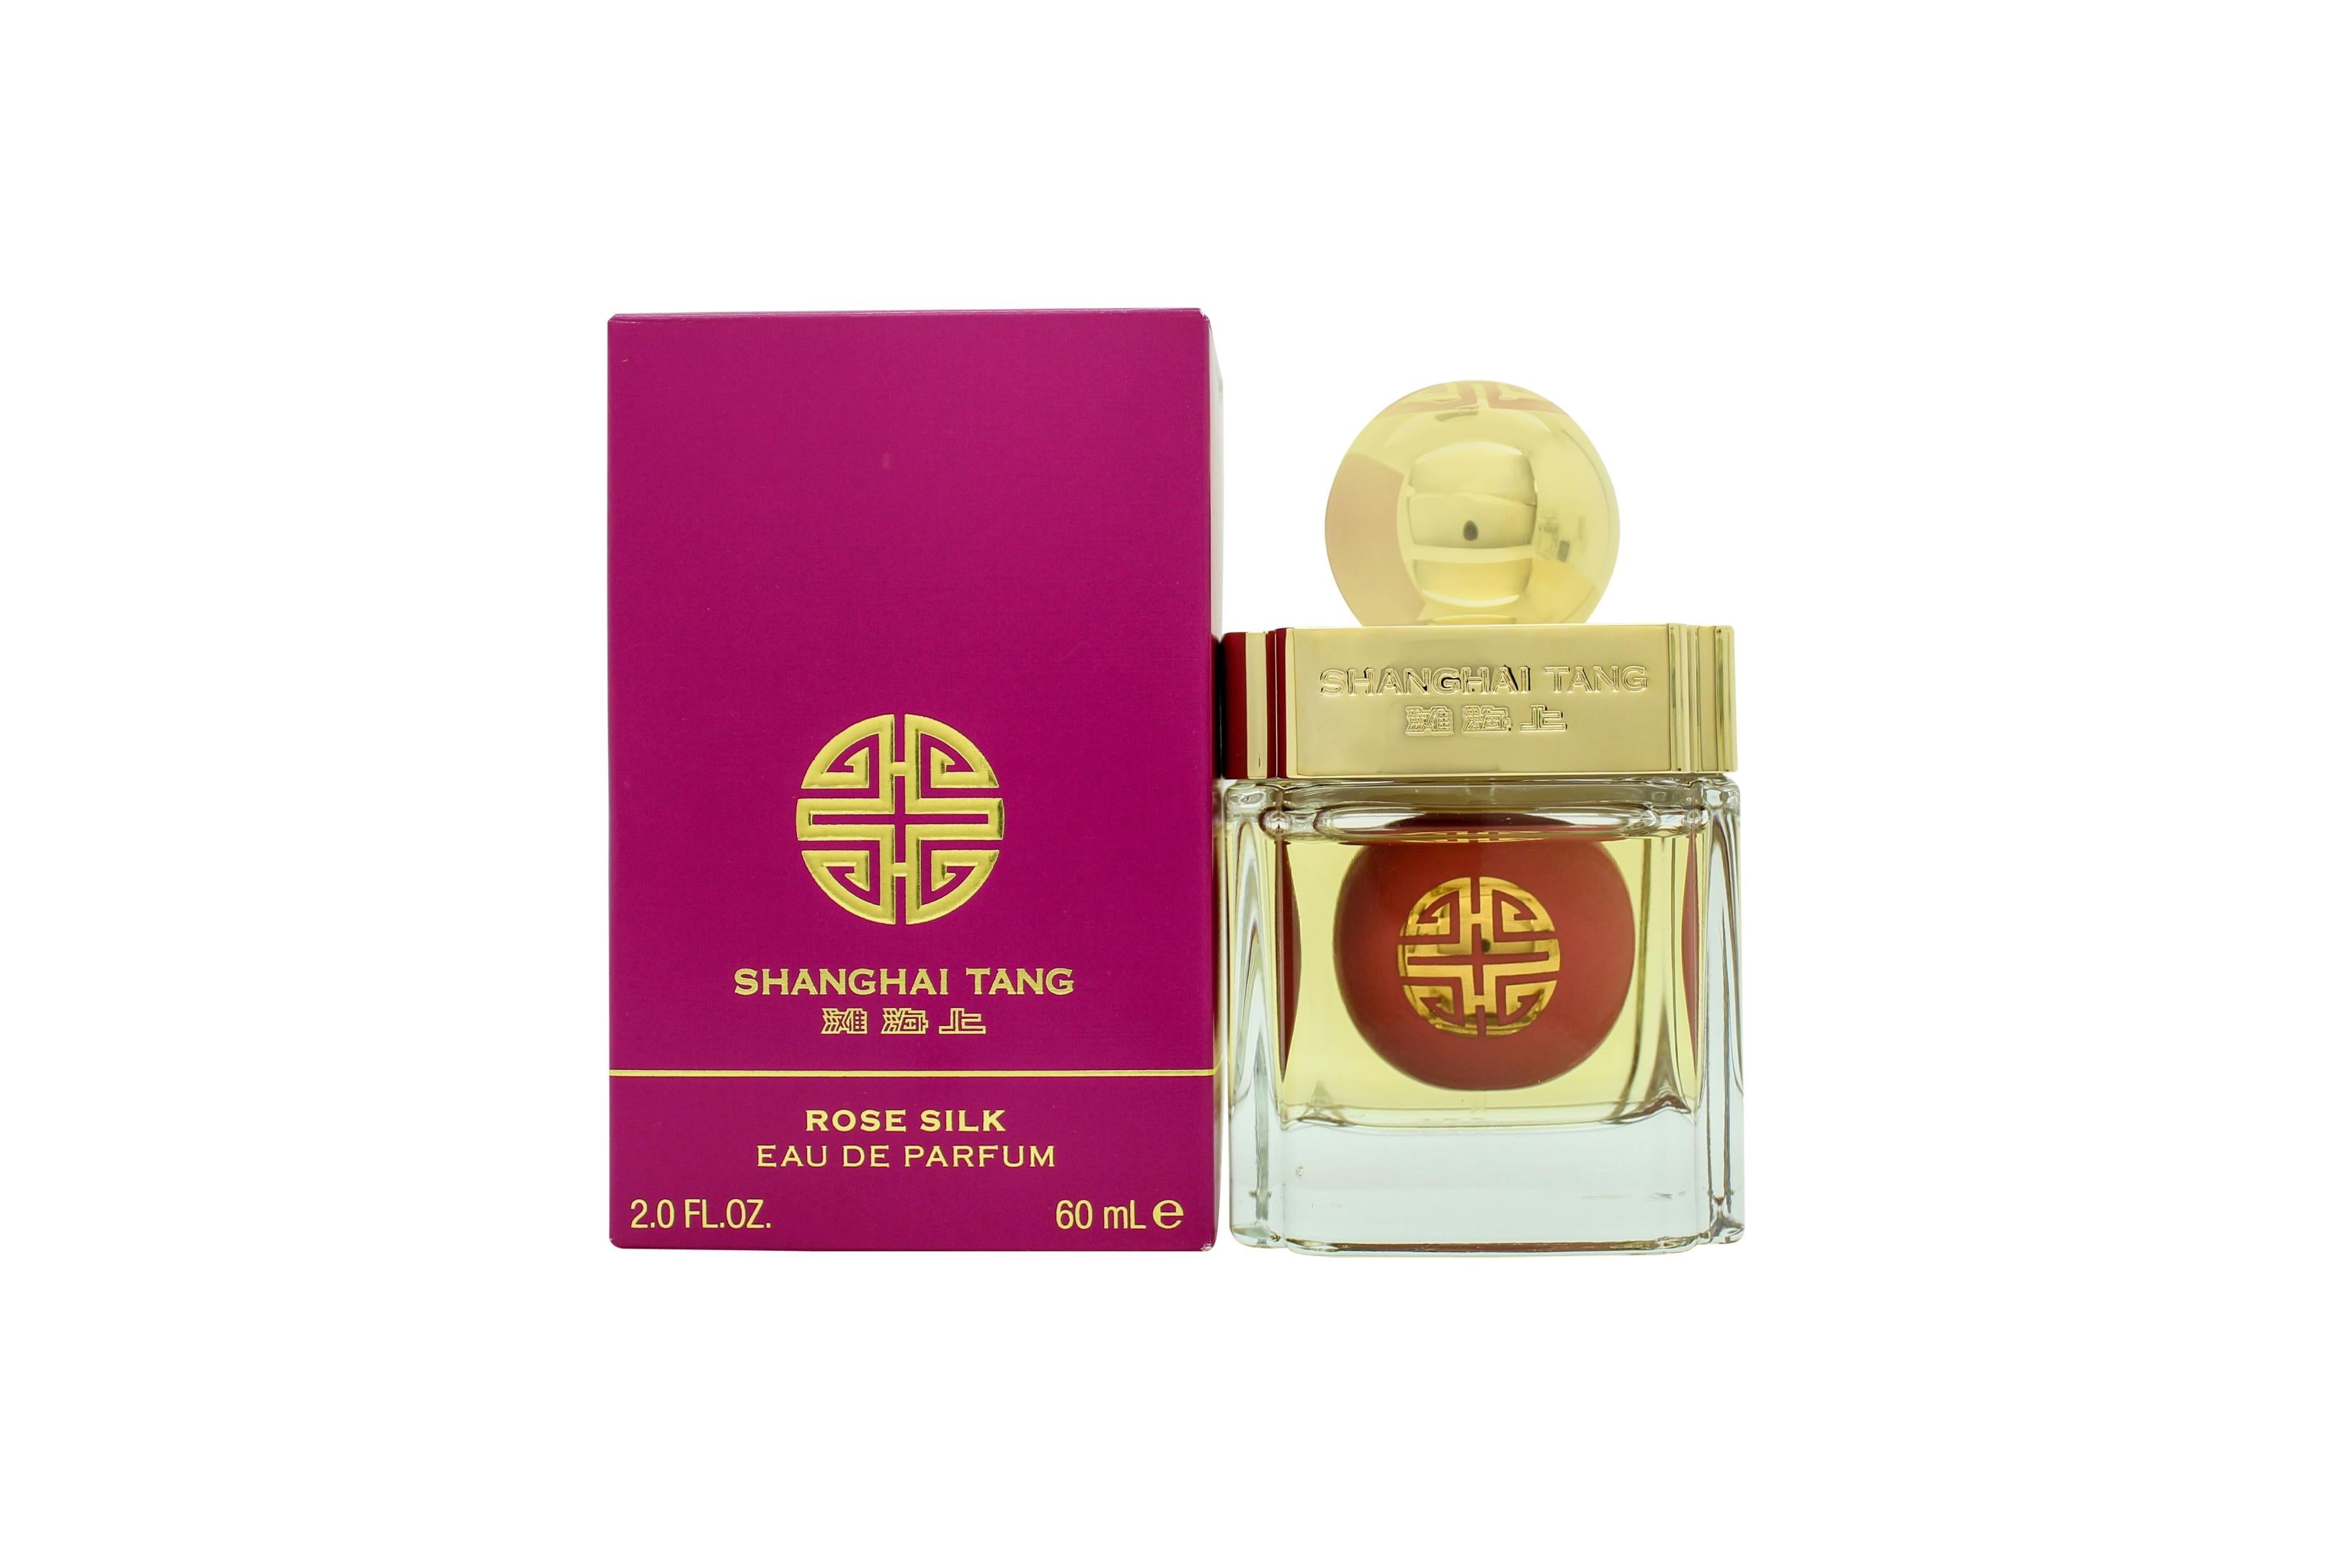 View Shanghai Tang Rose Silk Eau de Parfum 60ml Spray information